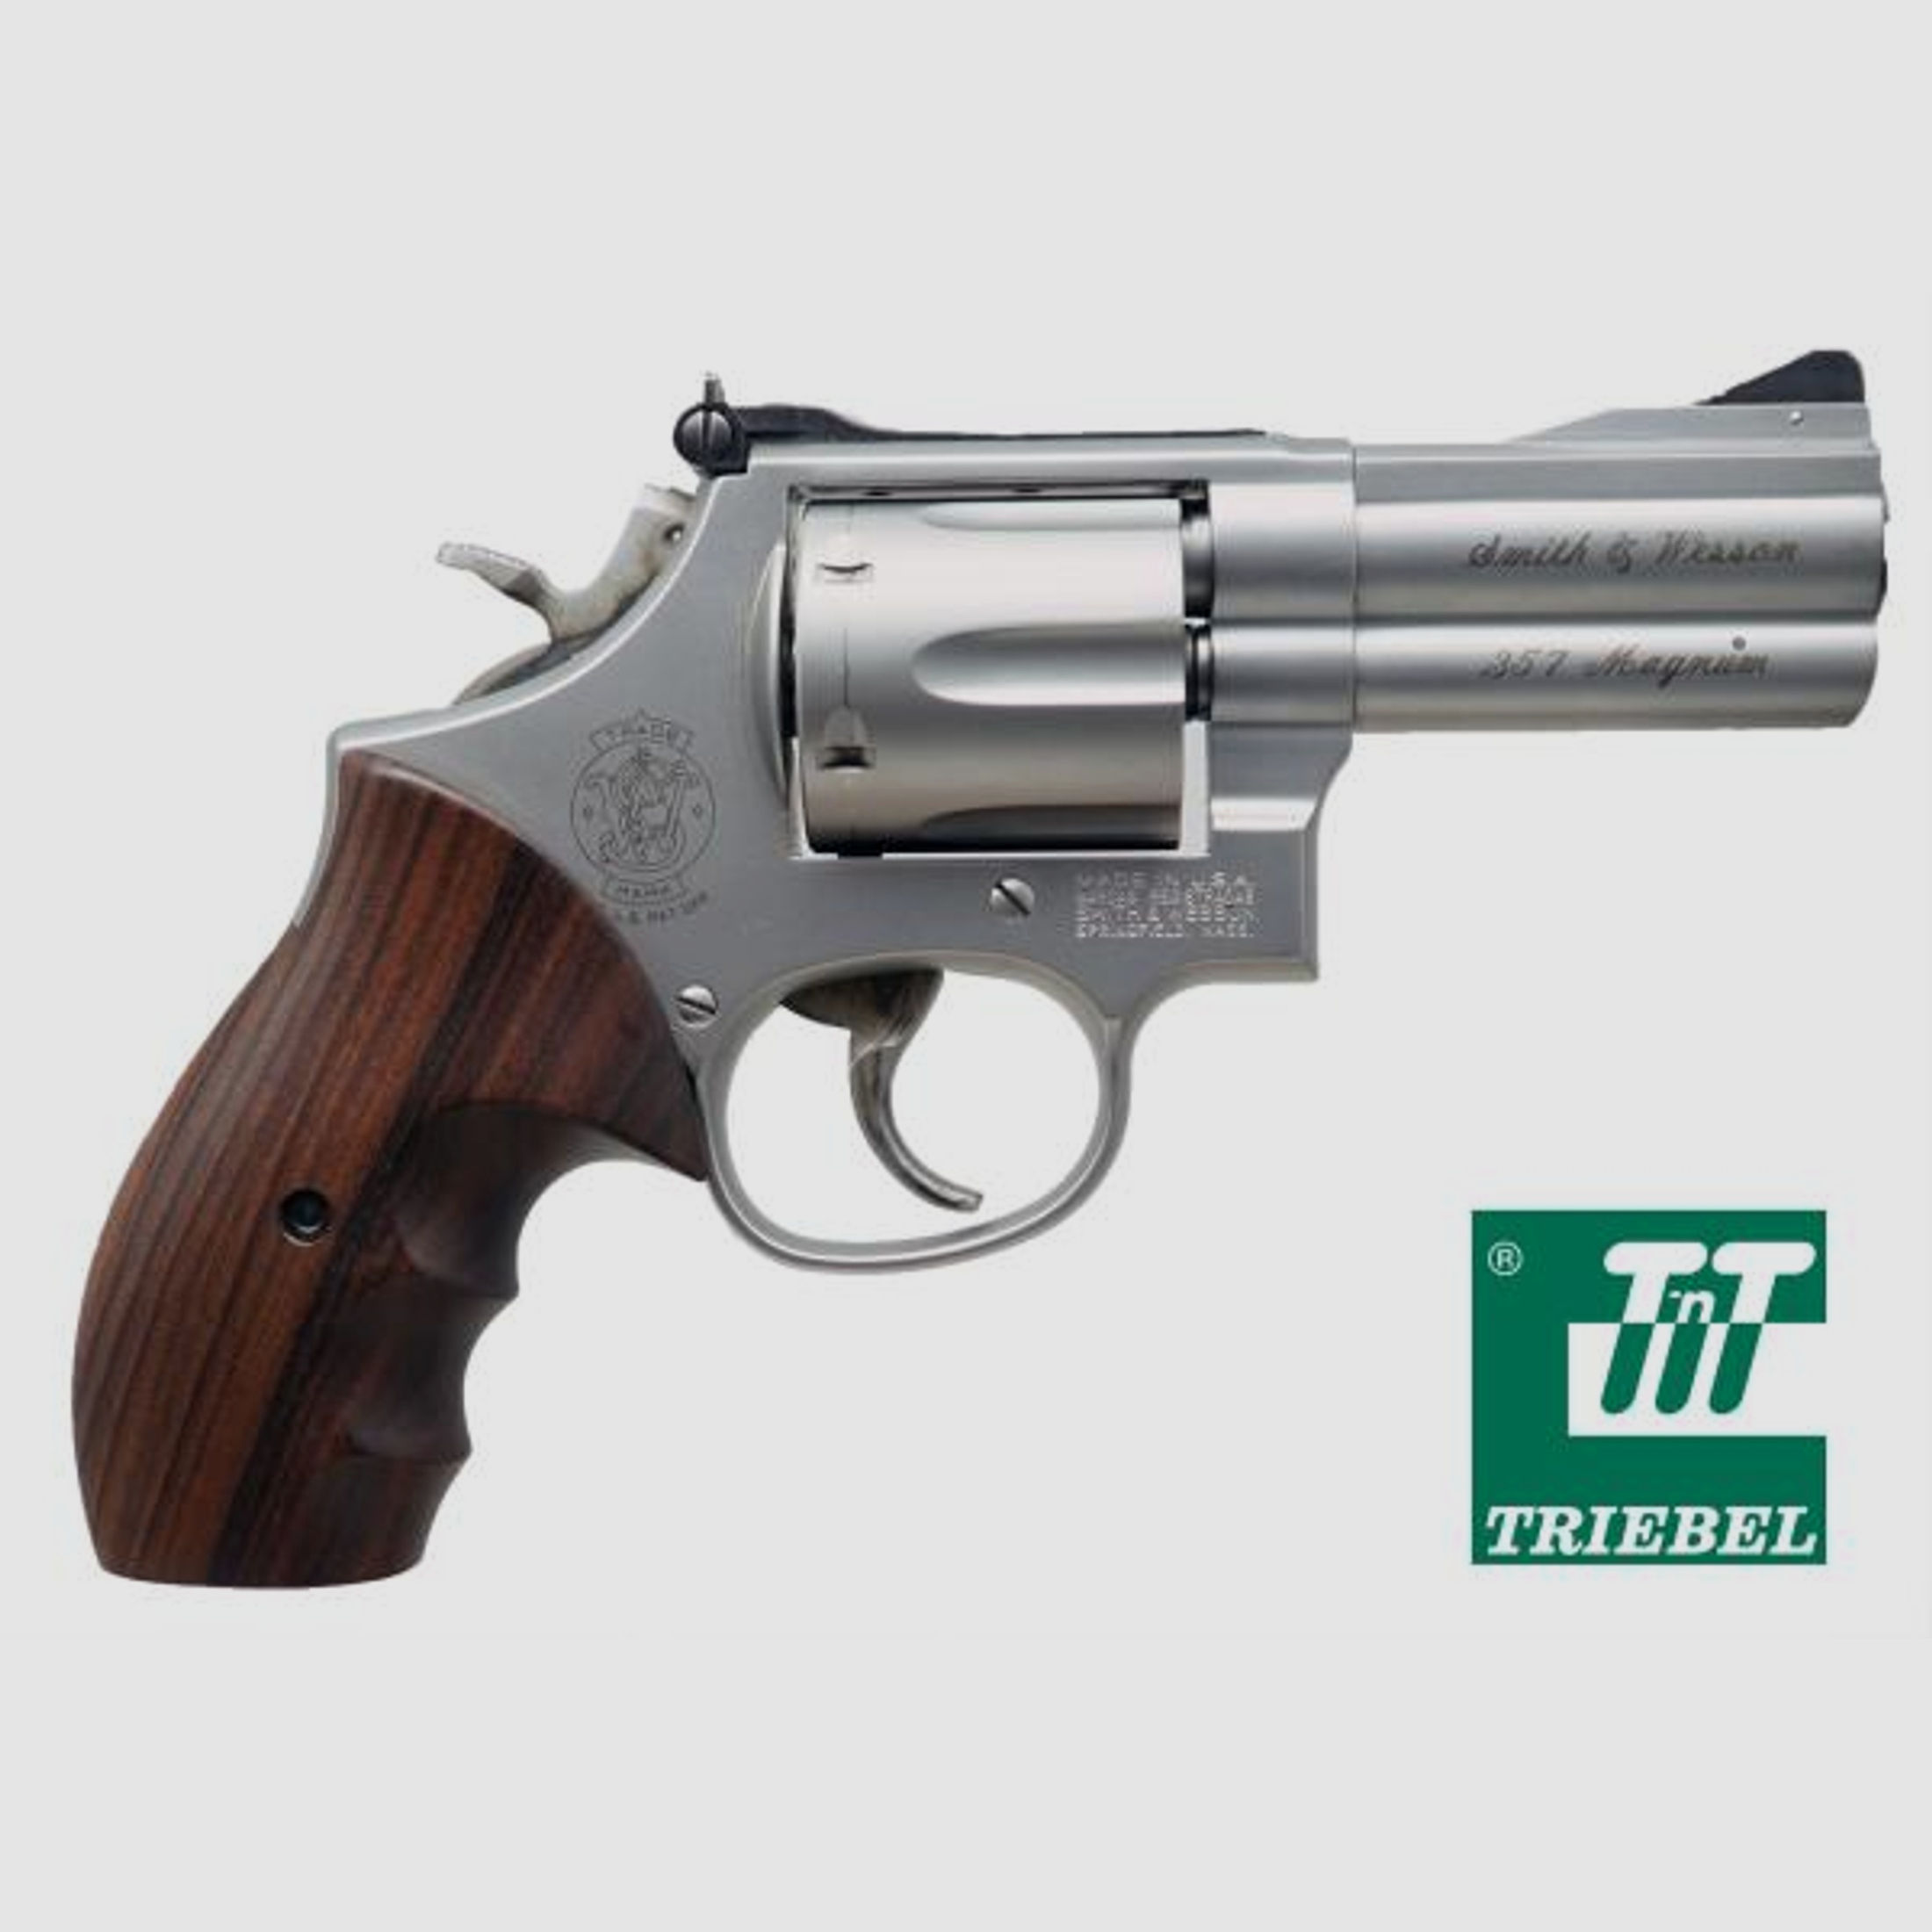 SMITH & WESSON Revolver (gebraucht) Mod. 686 -3' SecSpecial .357Mag   (1)